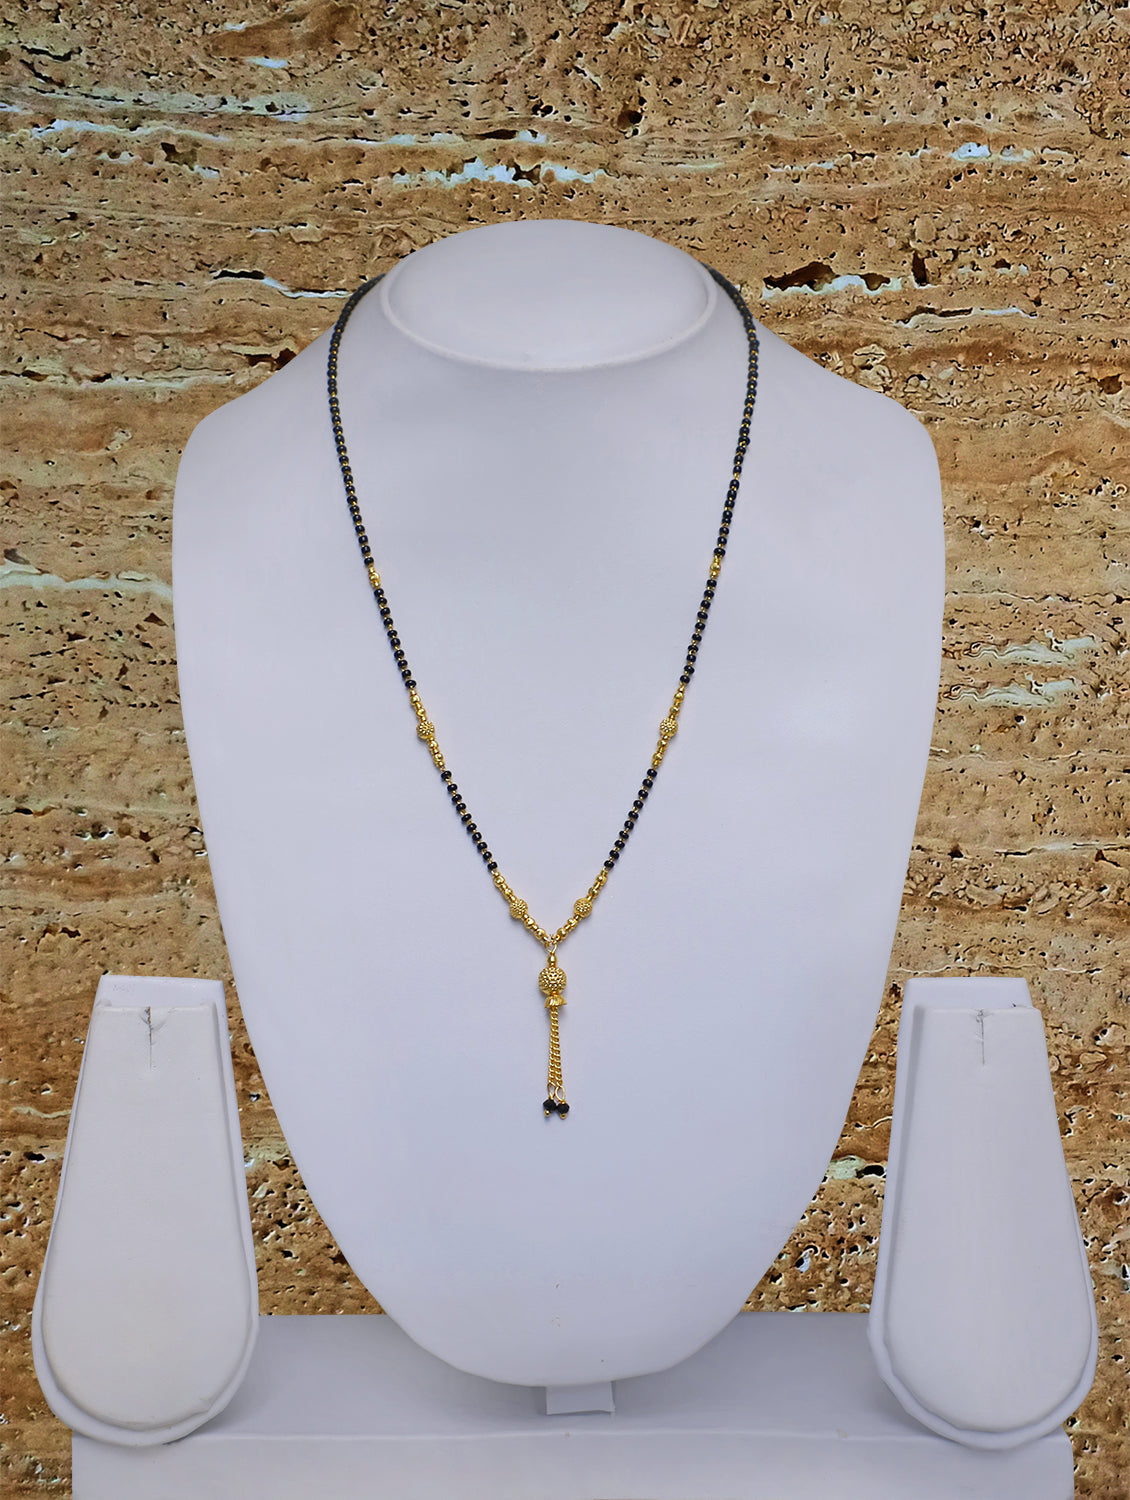 Digital Dress Room Short Mangalsutra Designs Gold Plated Latest Black Bead Golden Mani Latkan 18 Inches Mangalsutra